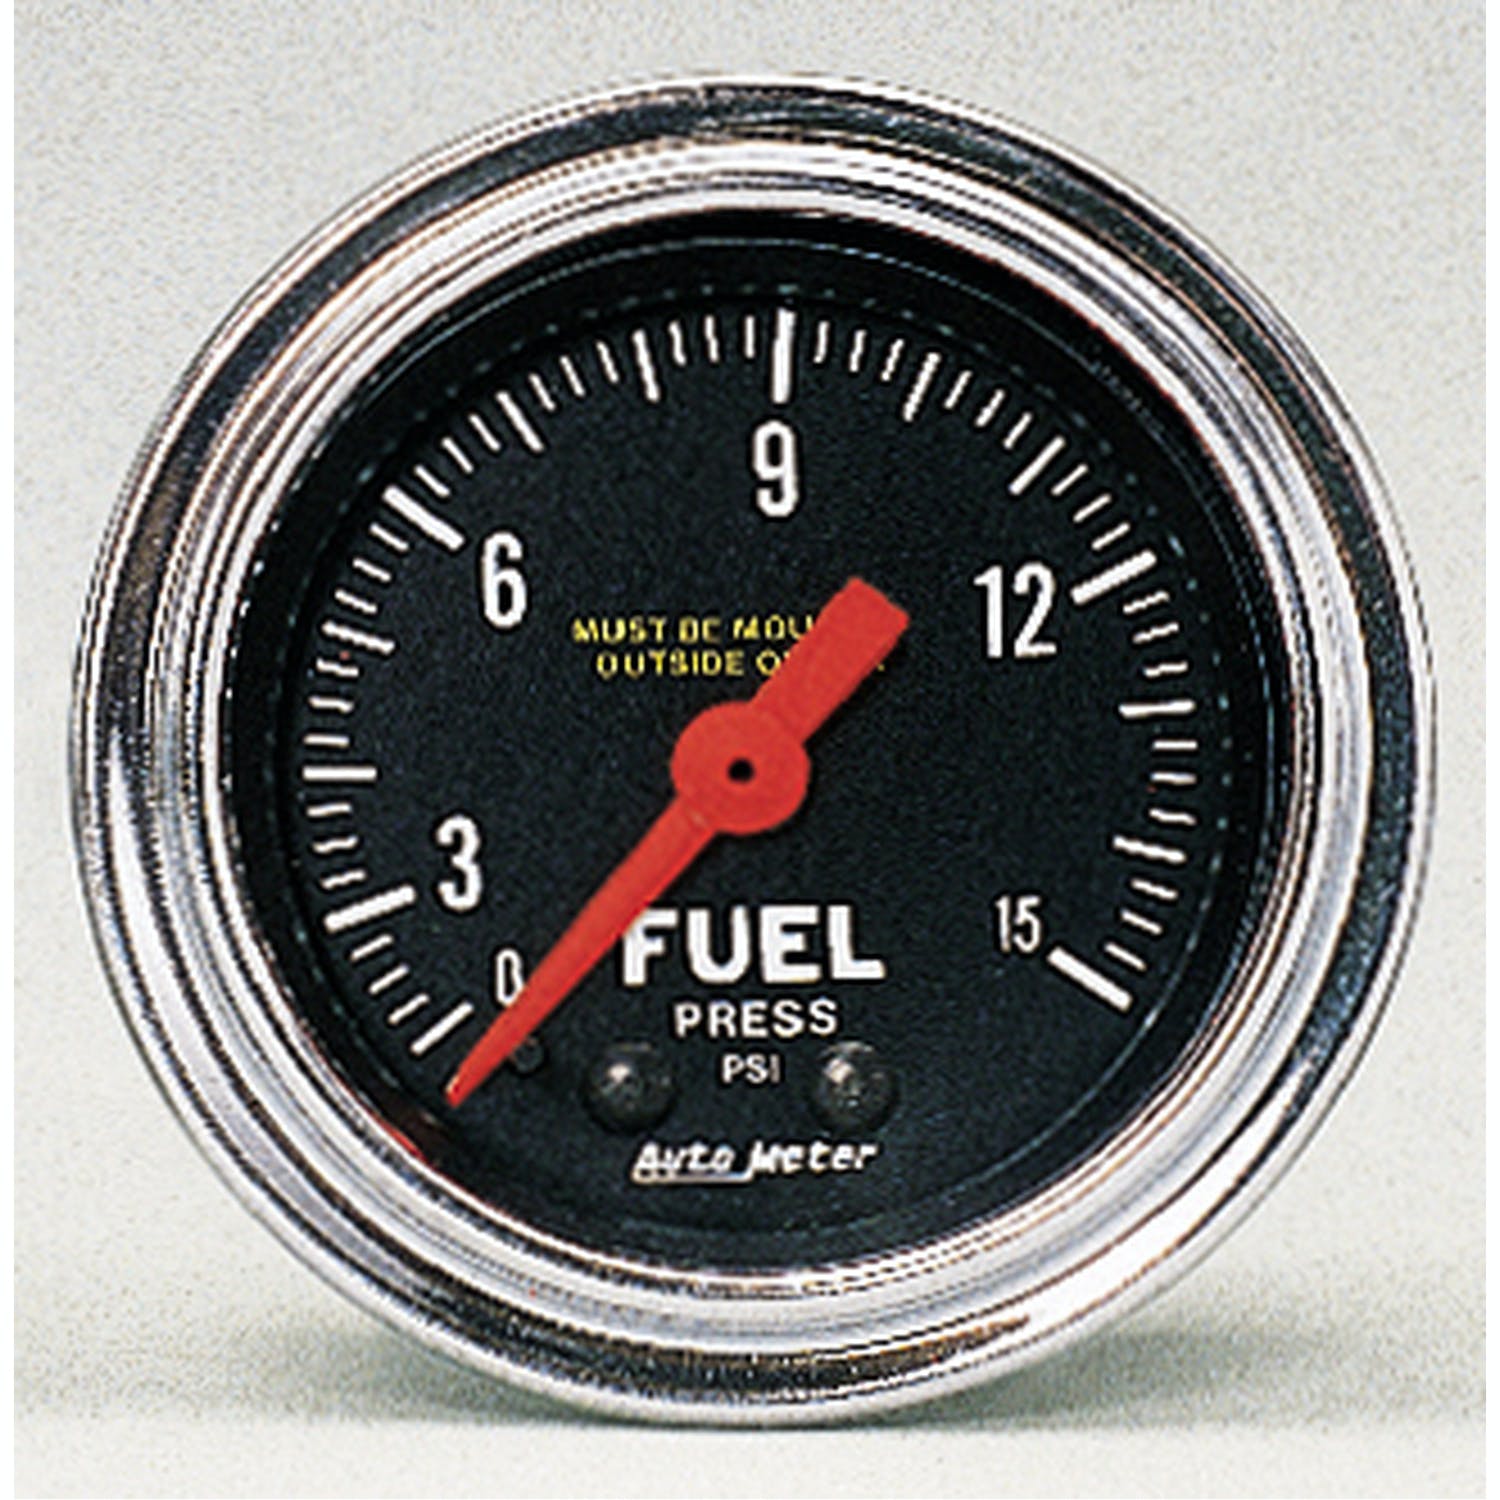 AutoMeter Products 2411 Fuel Pressure Gauge 0-15 PSI